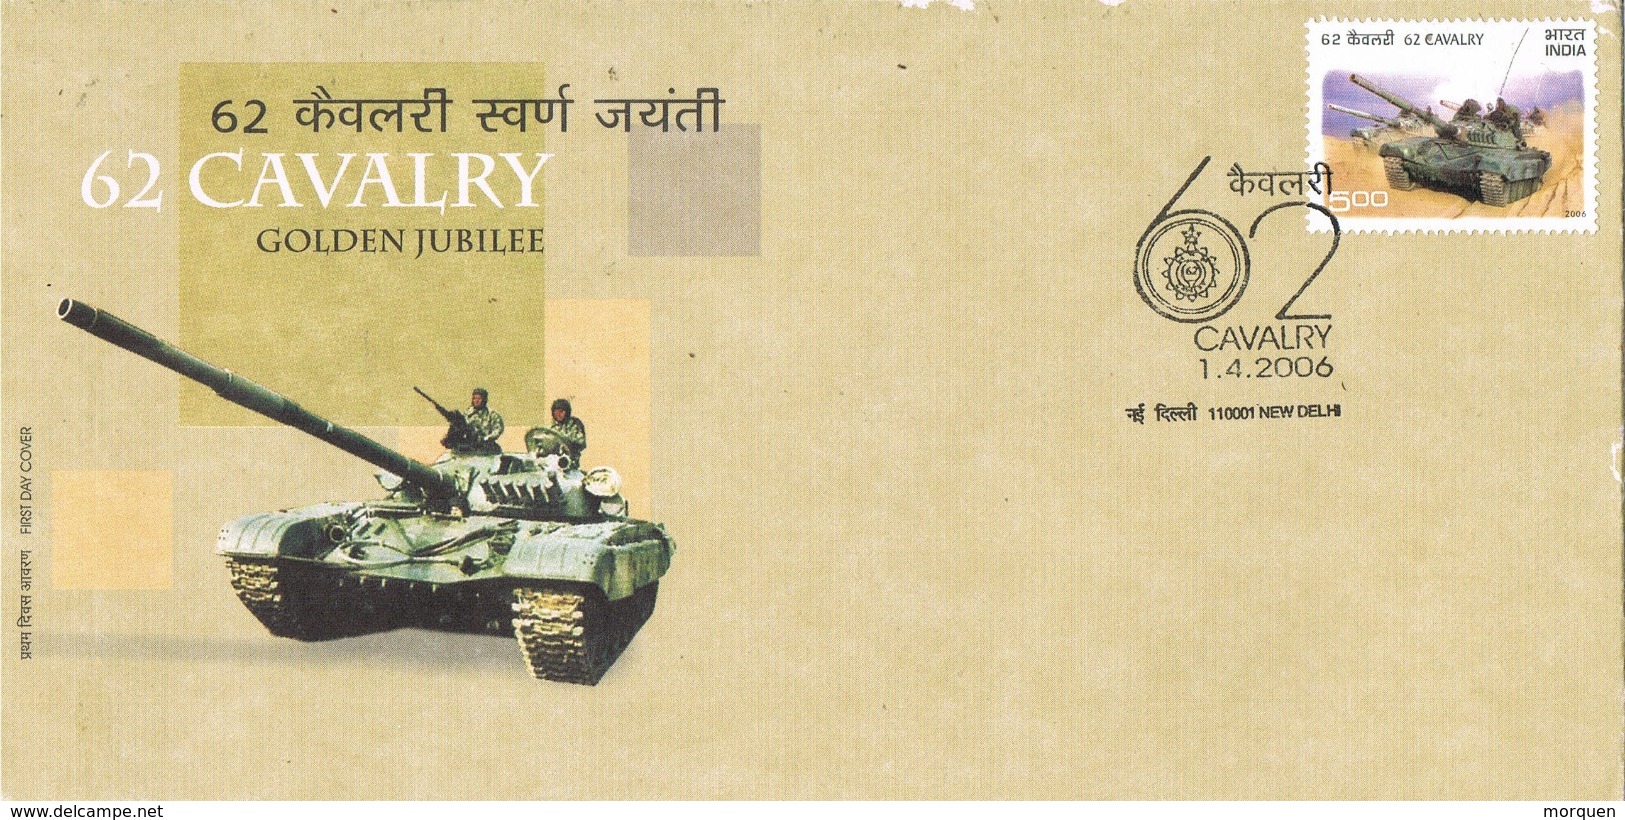 34215. Carta F.D.C. NEW DELHI (India) 2006. Golden Jubilee 62 CAVALRY, Caballeria, Tanque, Tank - FDC